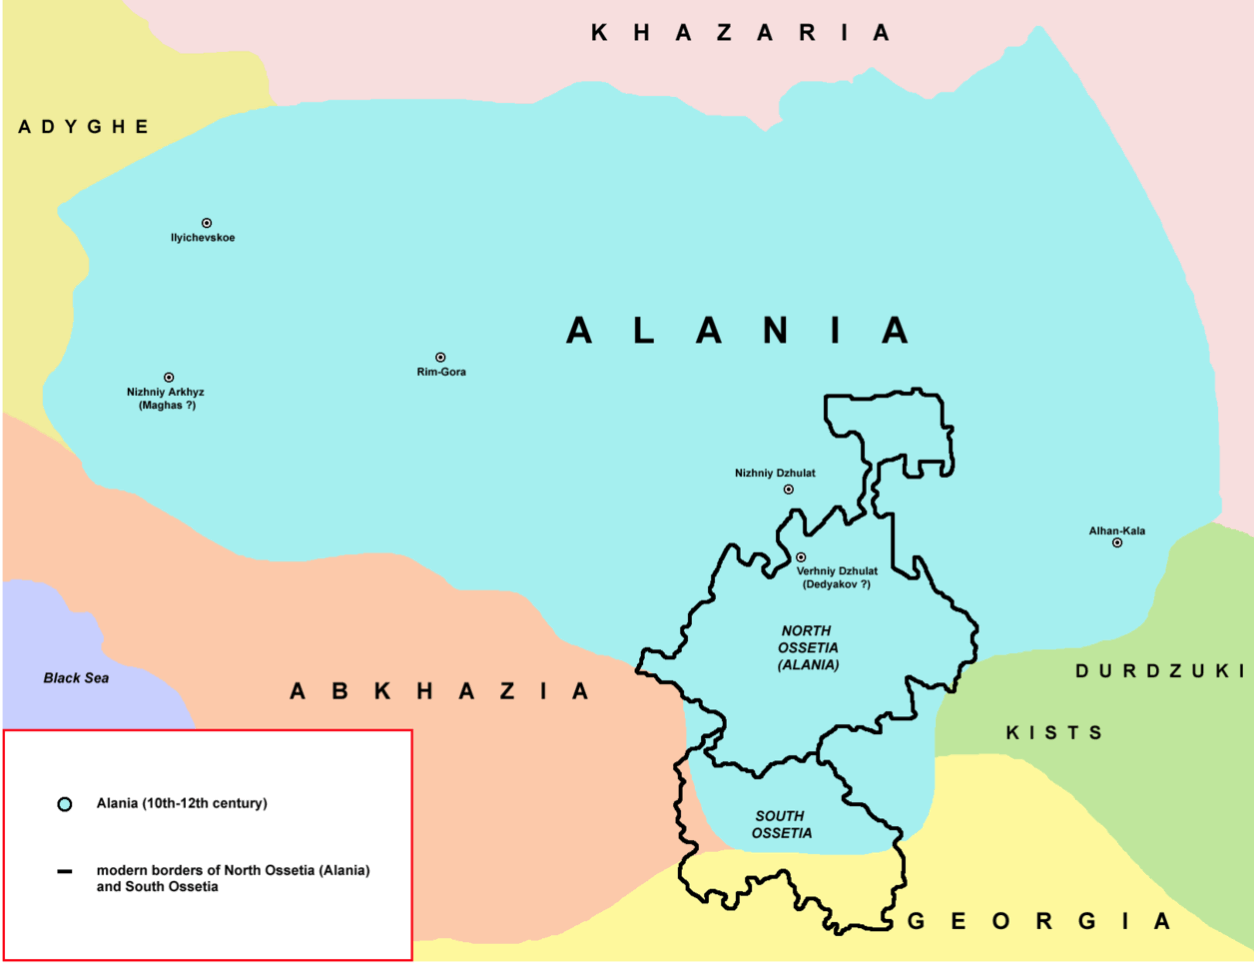 south ossetia alania map 10th 12th century